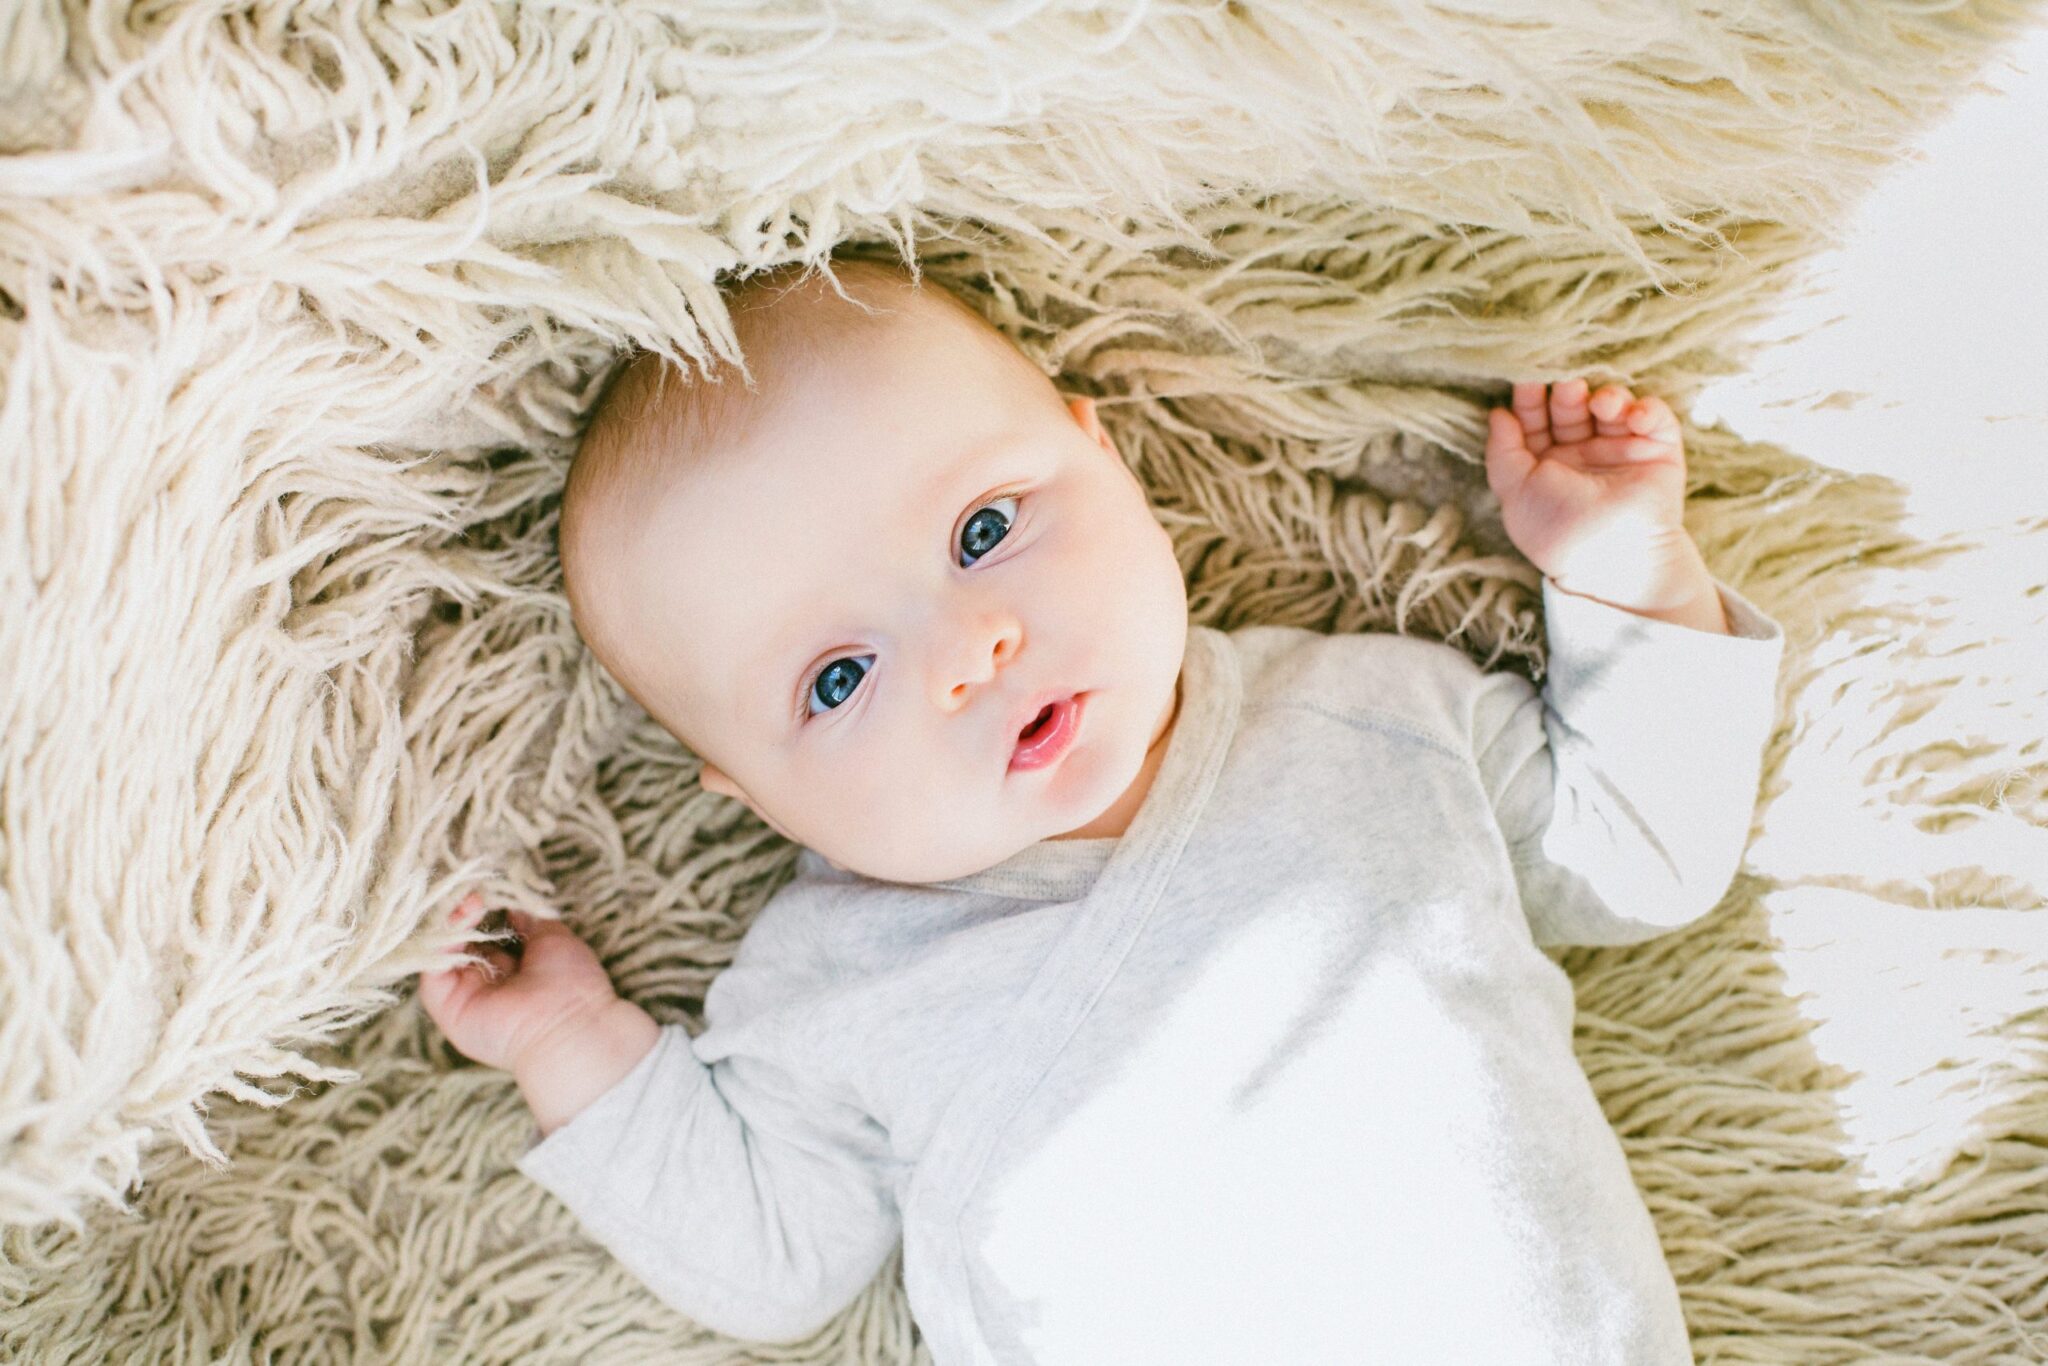 baby in a white onesie on a fluffy cream rug